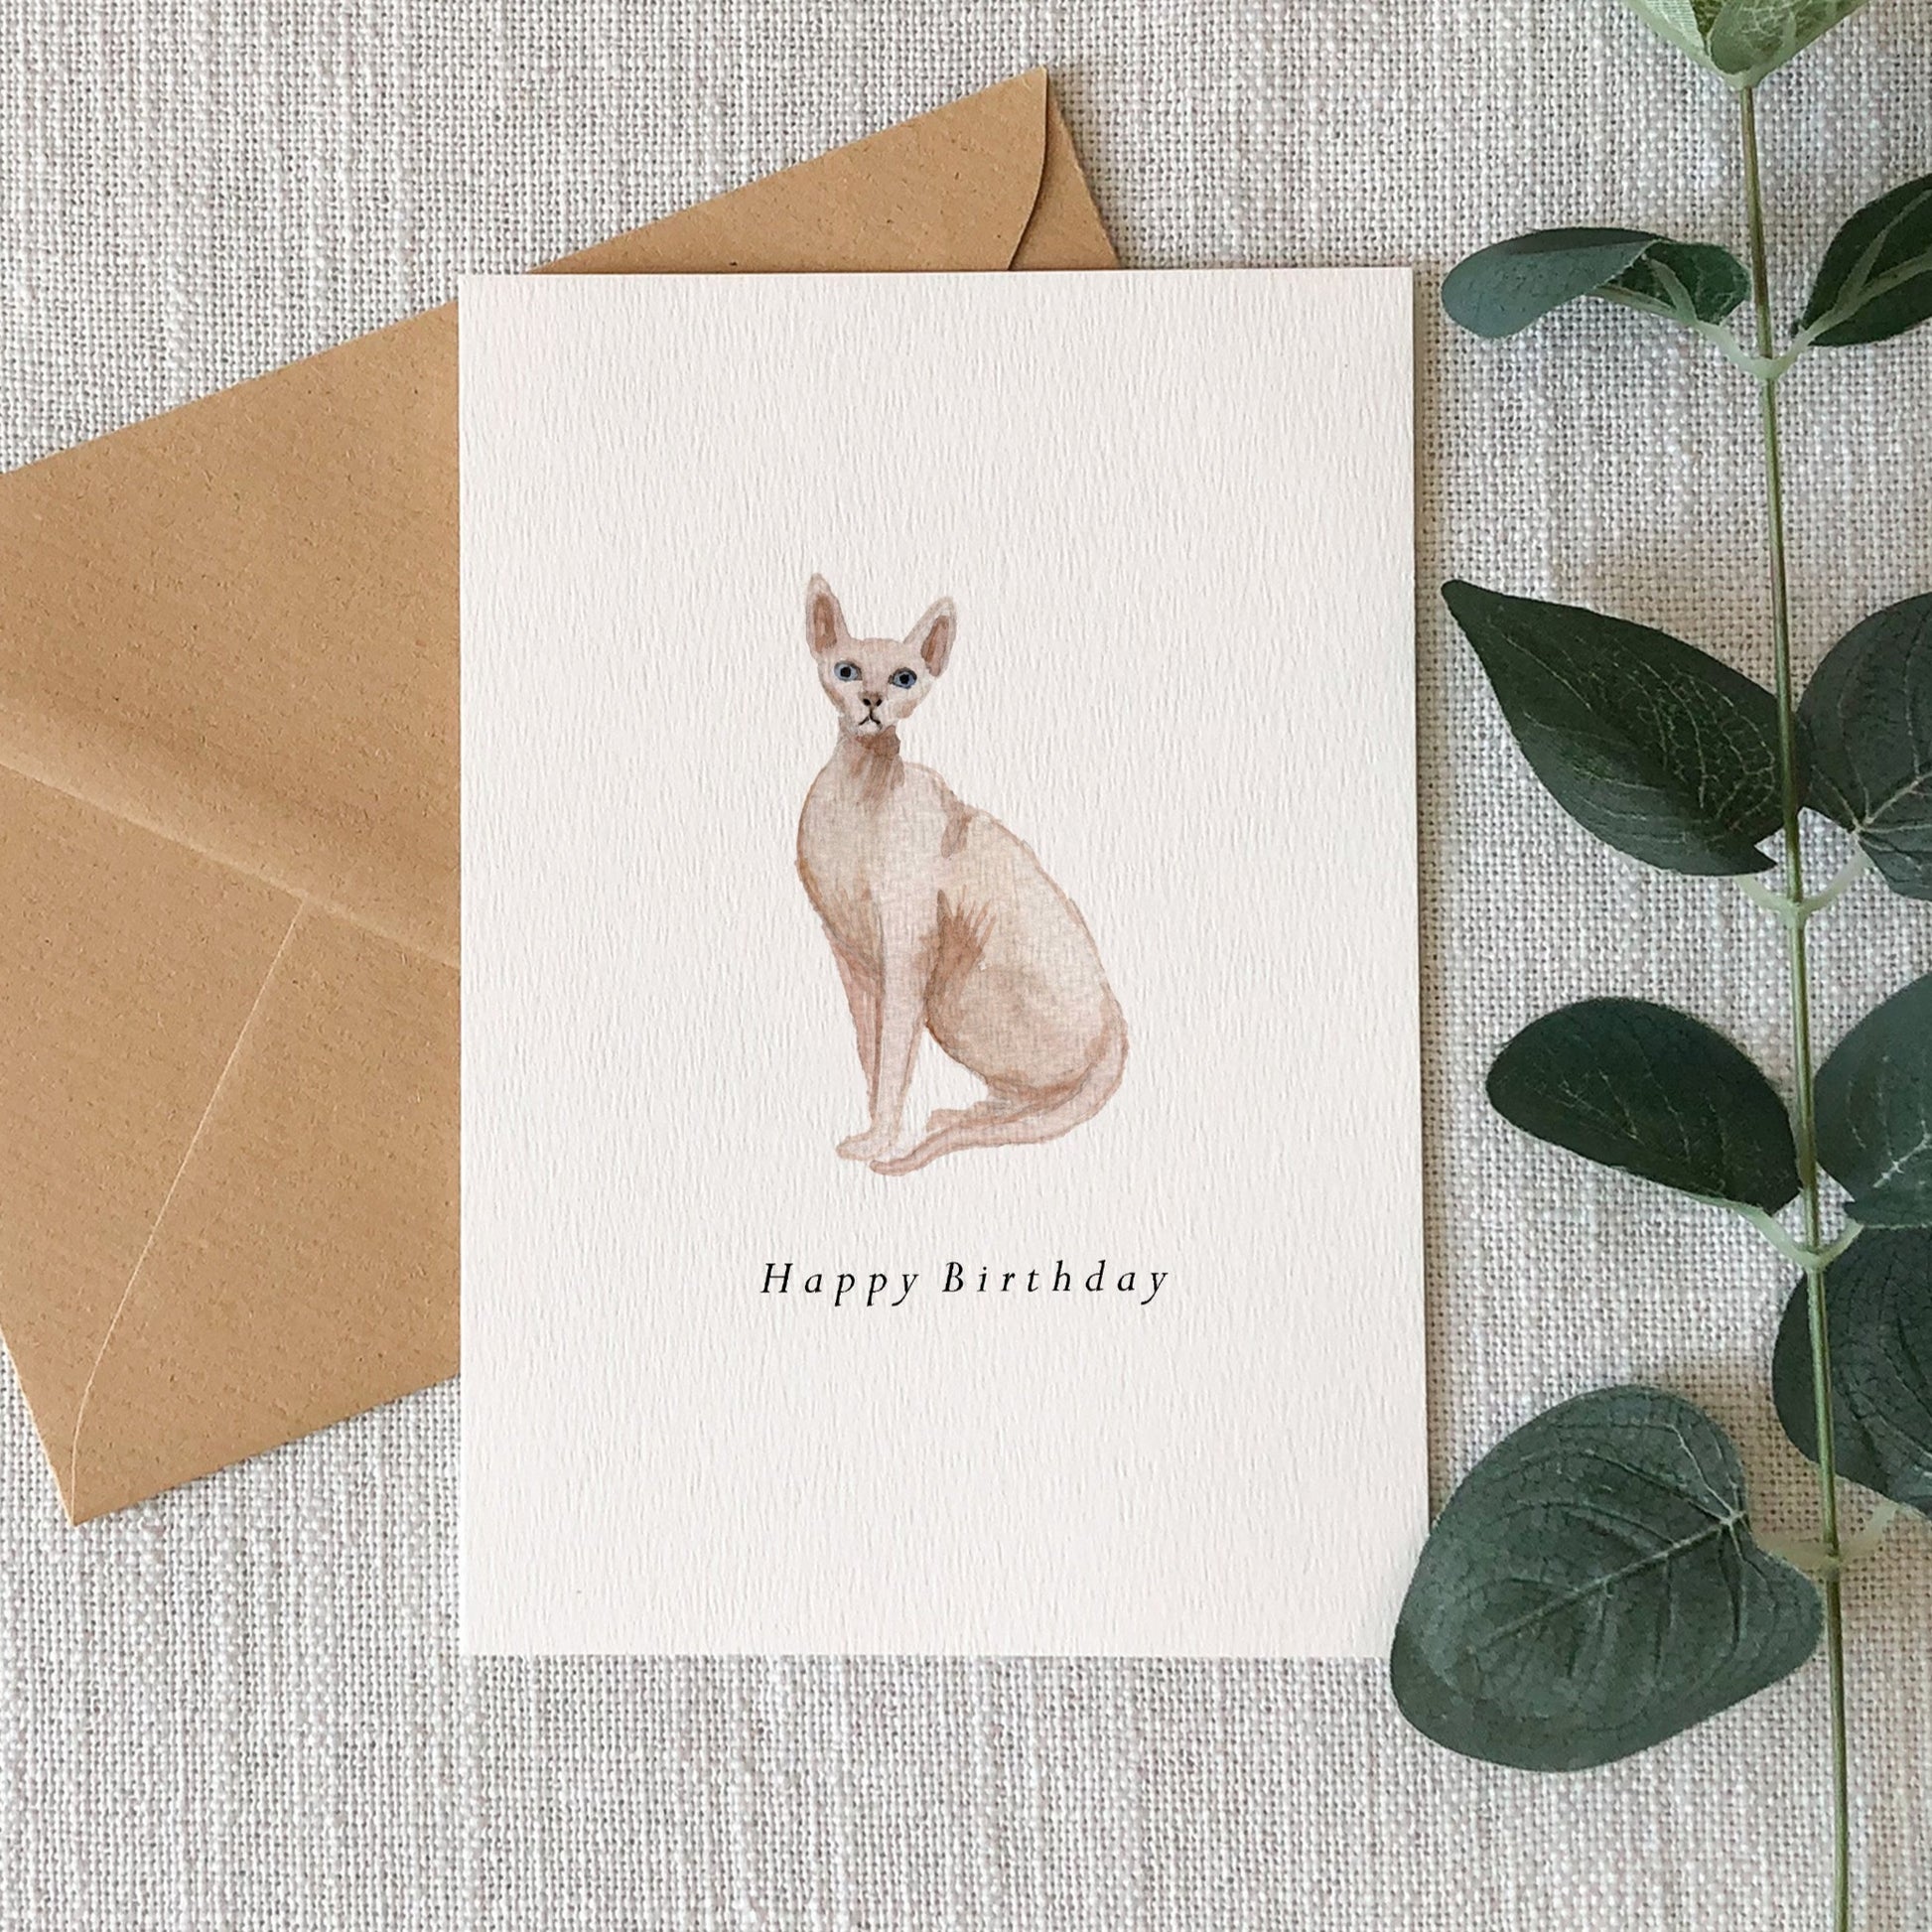 Sphynx Bald Cat Birthday Card by HeatherLucyJ. Pet Portrait Cat Greeting Card